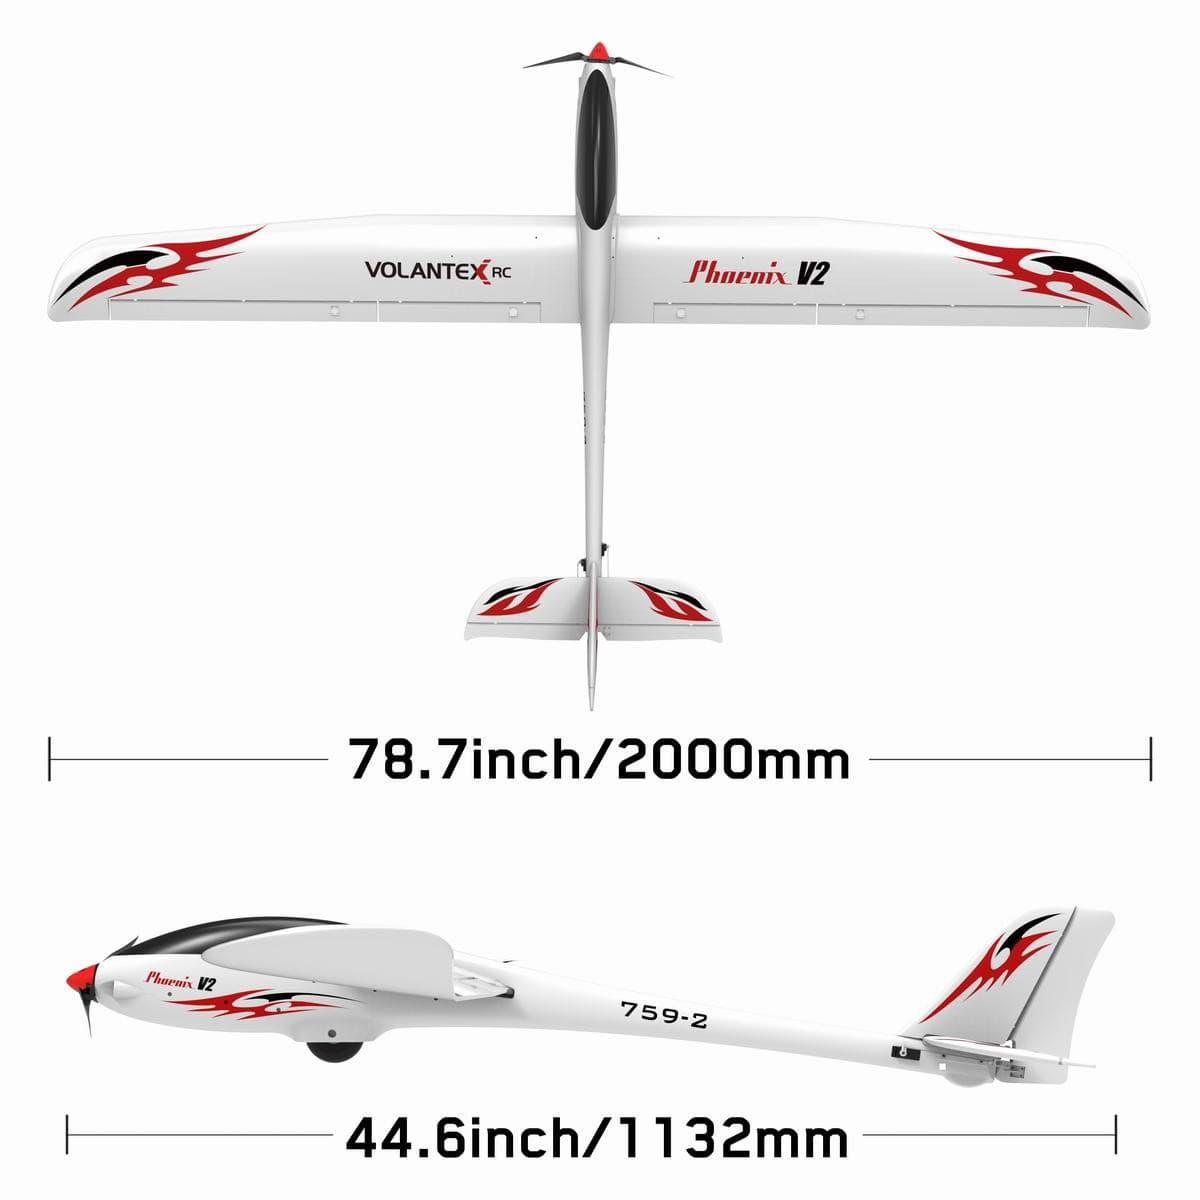 Phoenix Rc Glider: Component descriptions of Phoenix RC Glider